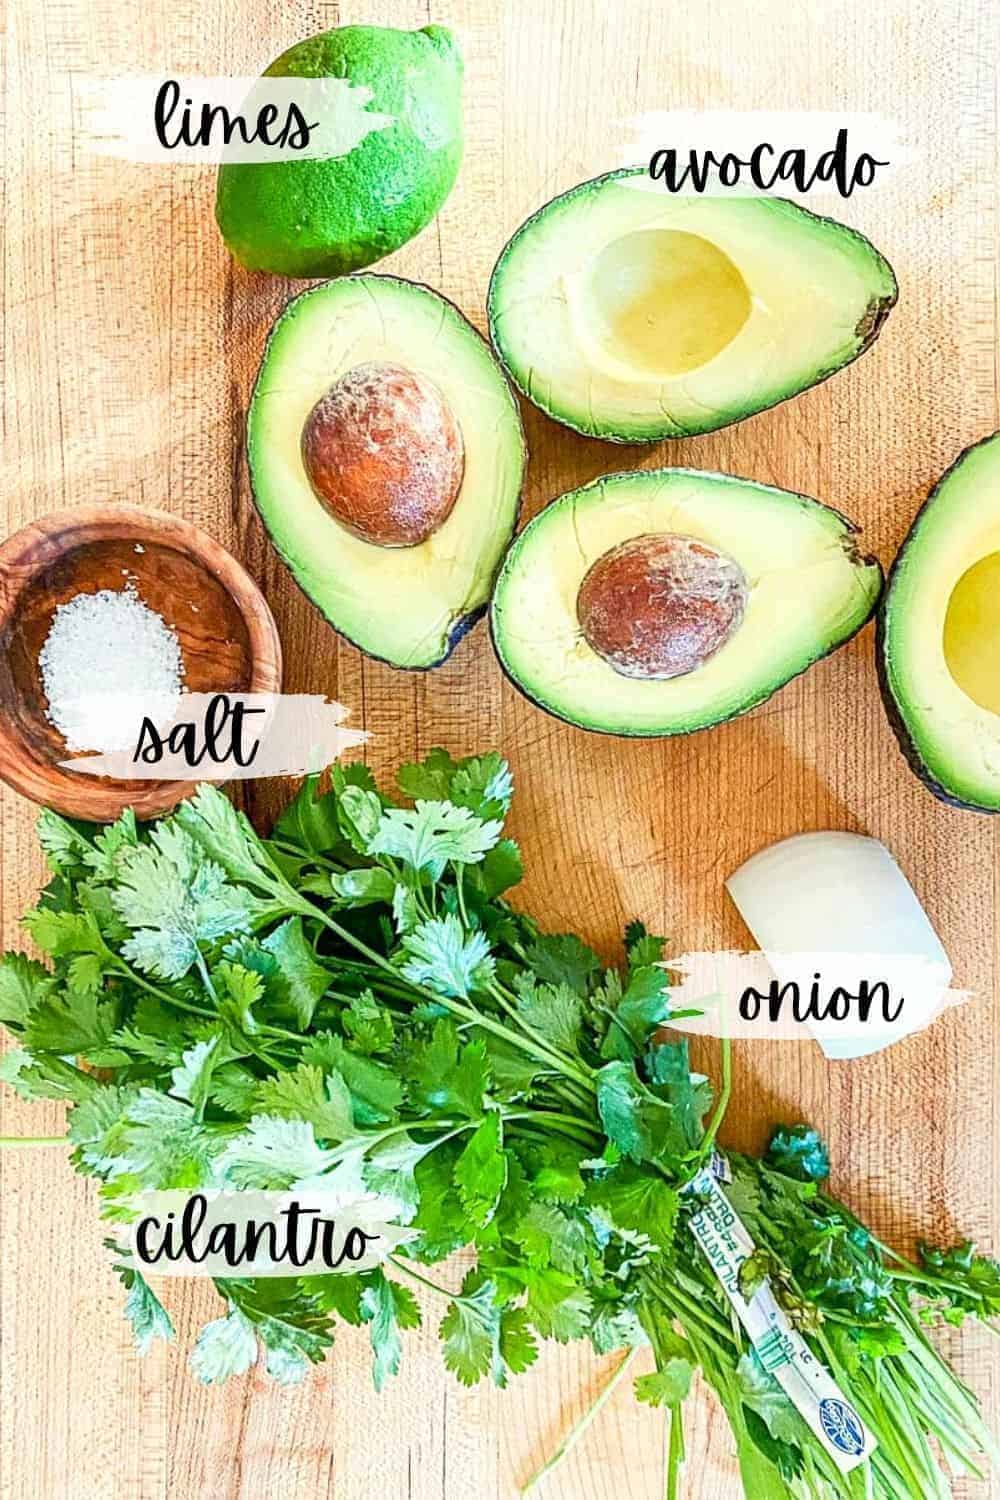 guacamole ingredients